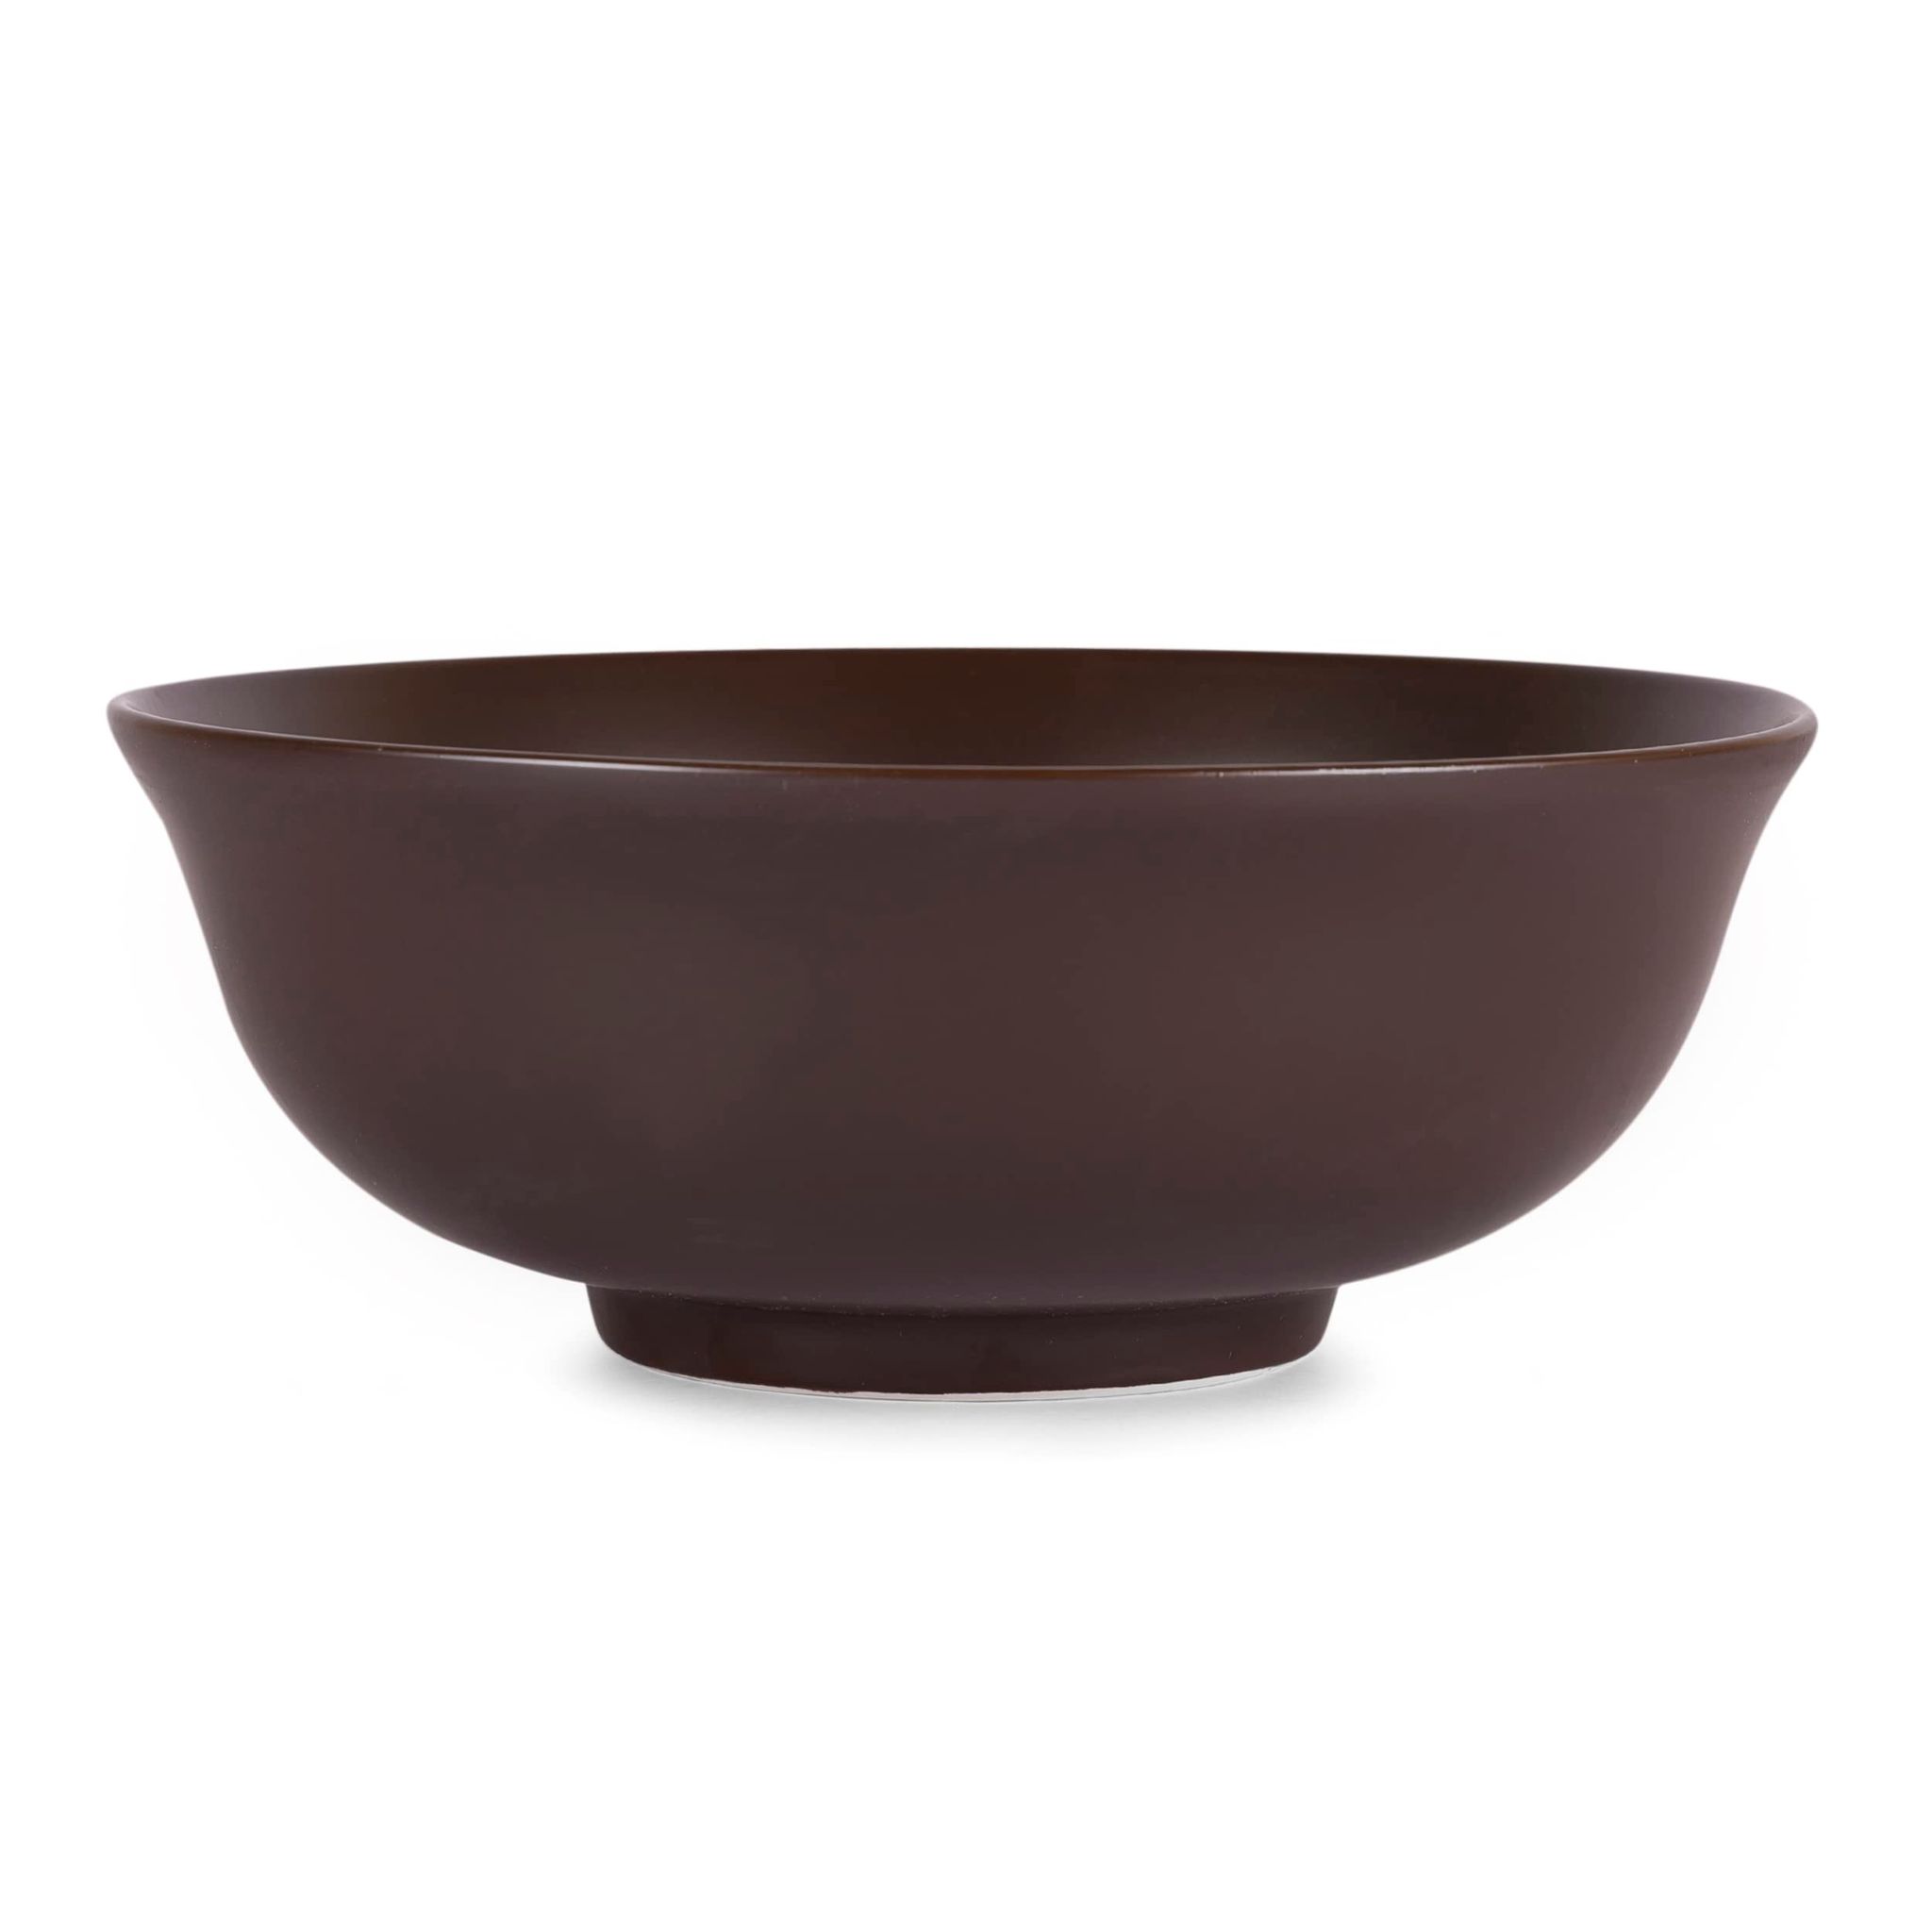 Hitkari Potteries Porcelain Choco Brown Serving Bowl 2 PC for Home & Kitchen | Serving Bowl Set 2 PC (23 x 5.5 cm) Brown